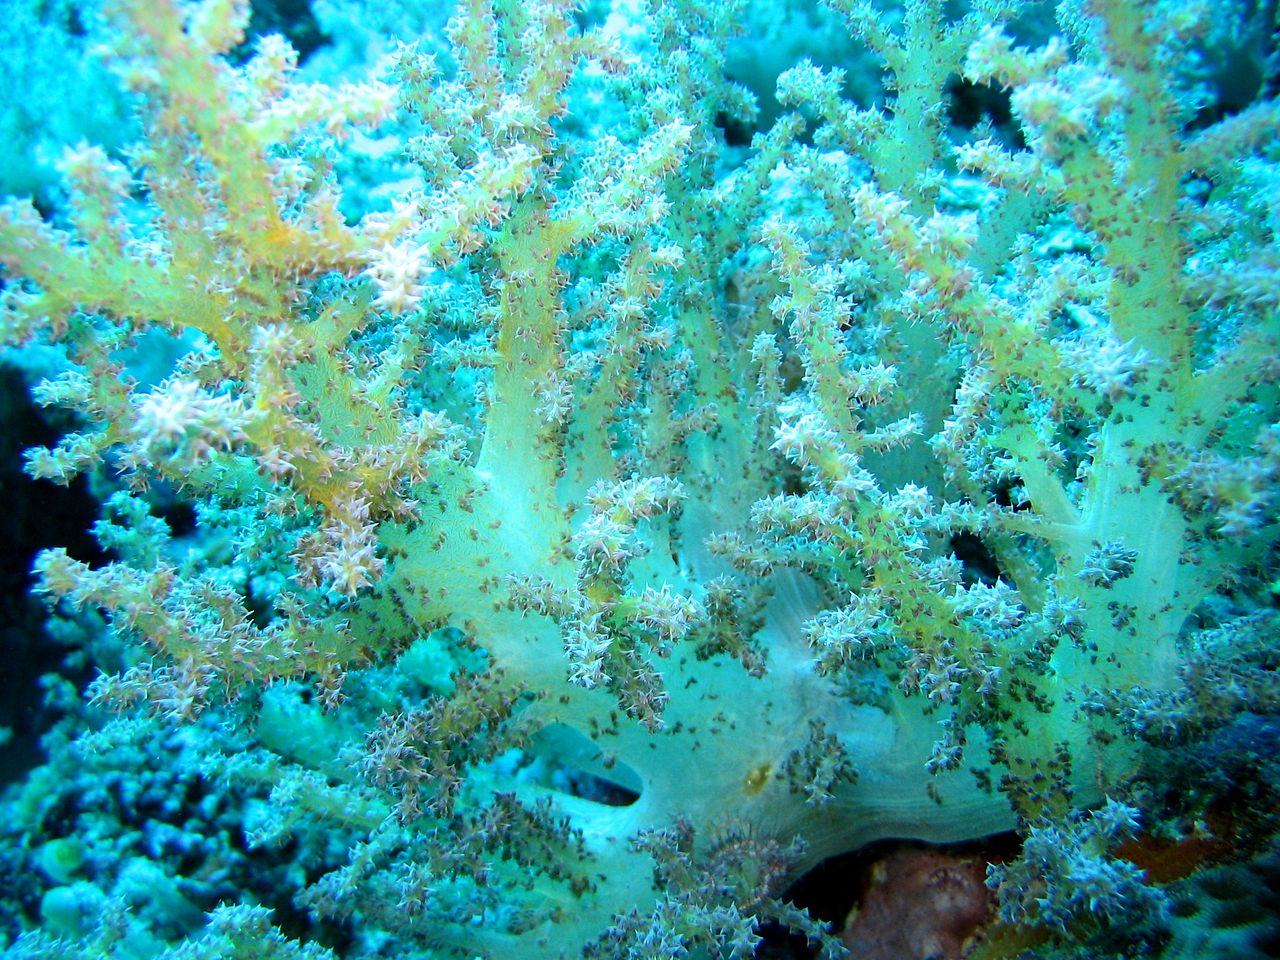 Yellowish white soft coral